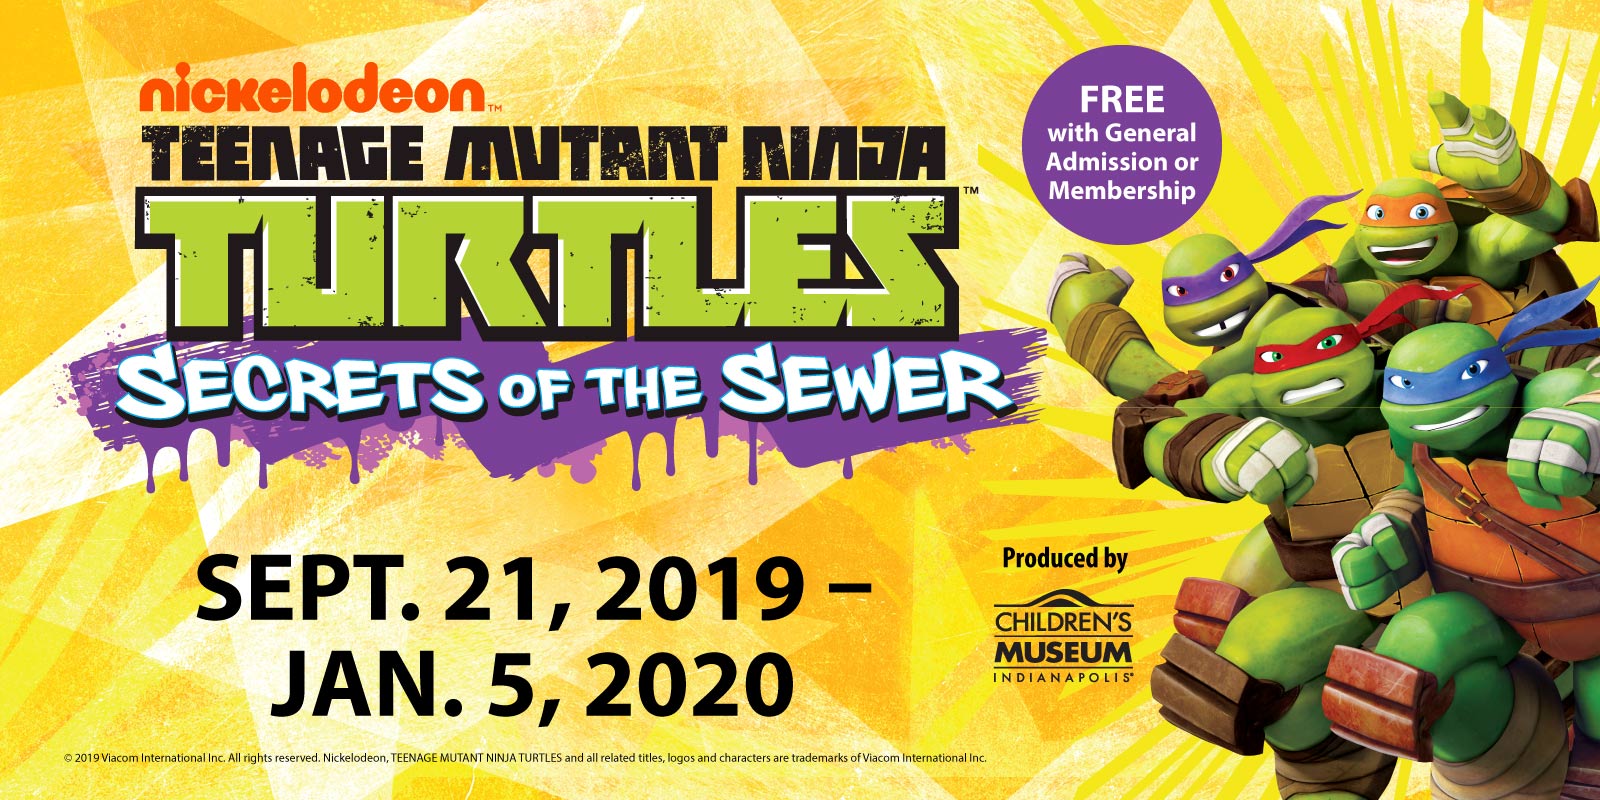 Rise of the Teenage Mutant Ninja Turtles. Mutant Mania, Washington County  Cooperative Library Services